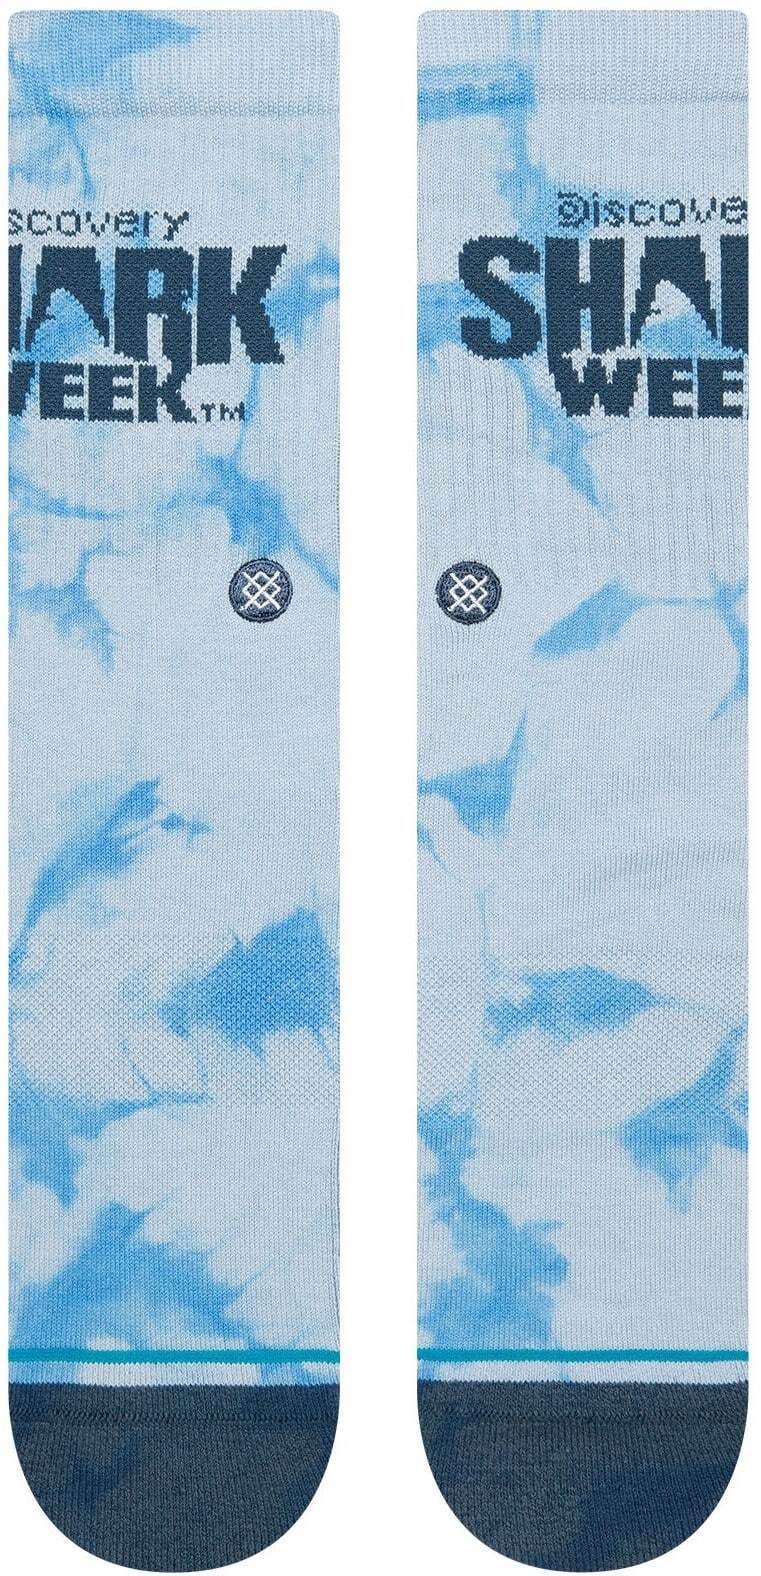 Shark Week Socks by Stance x Discovery